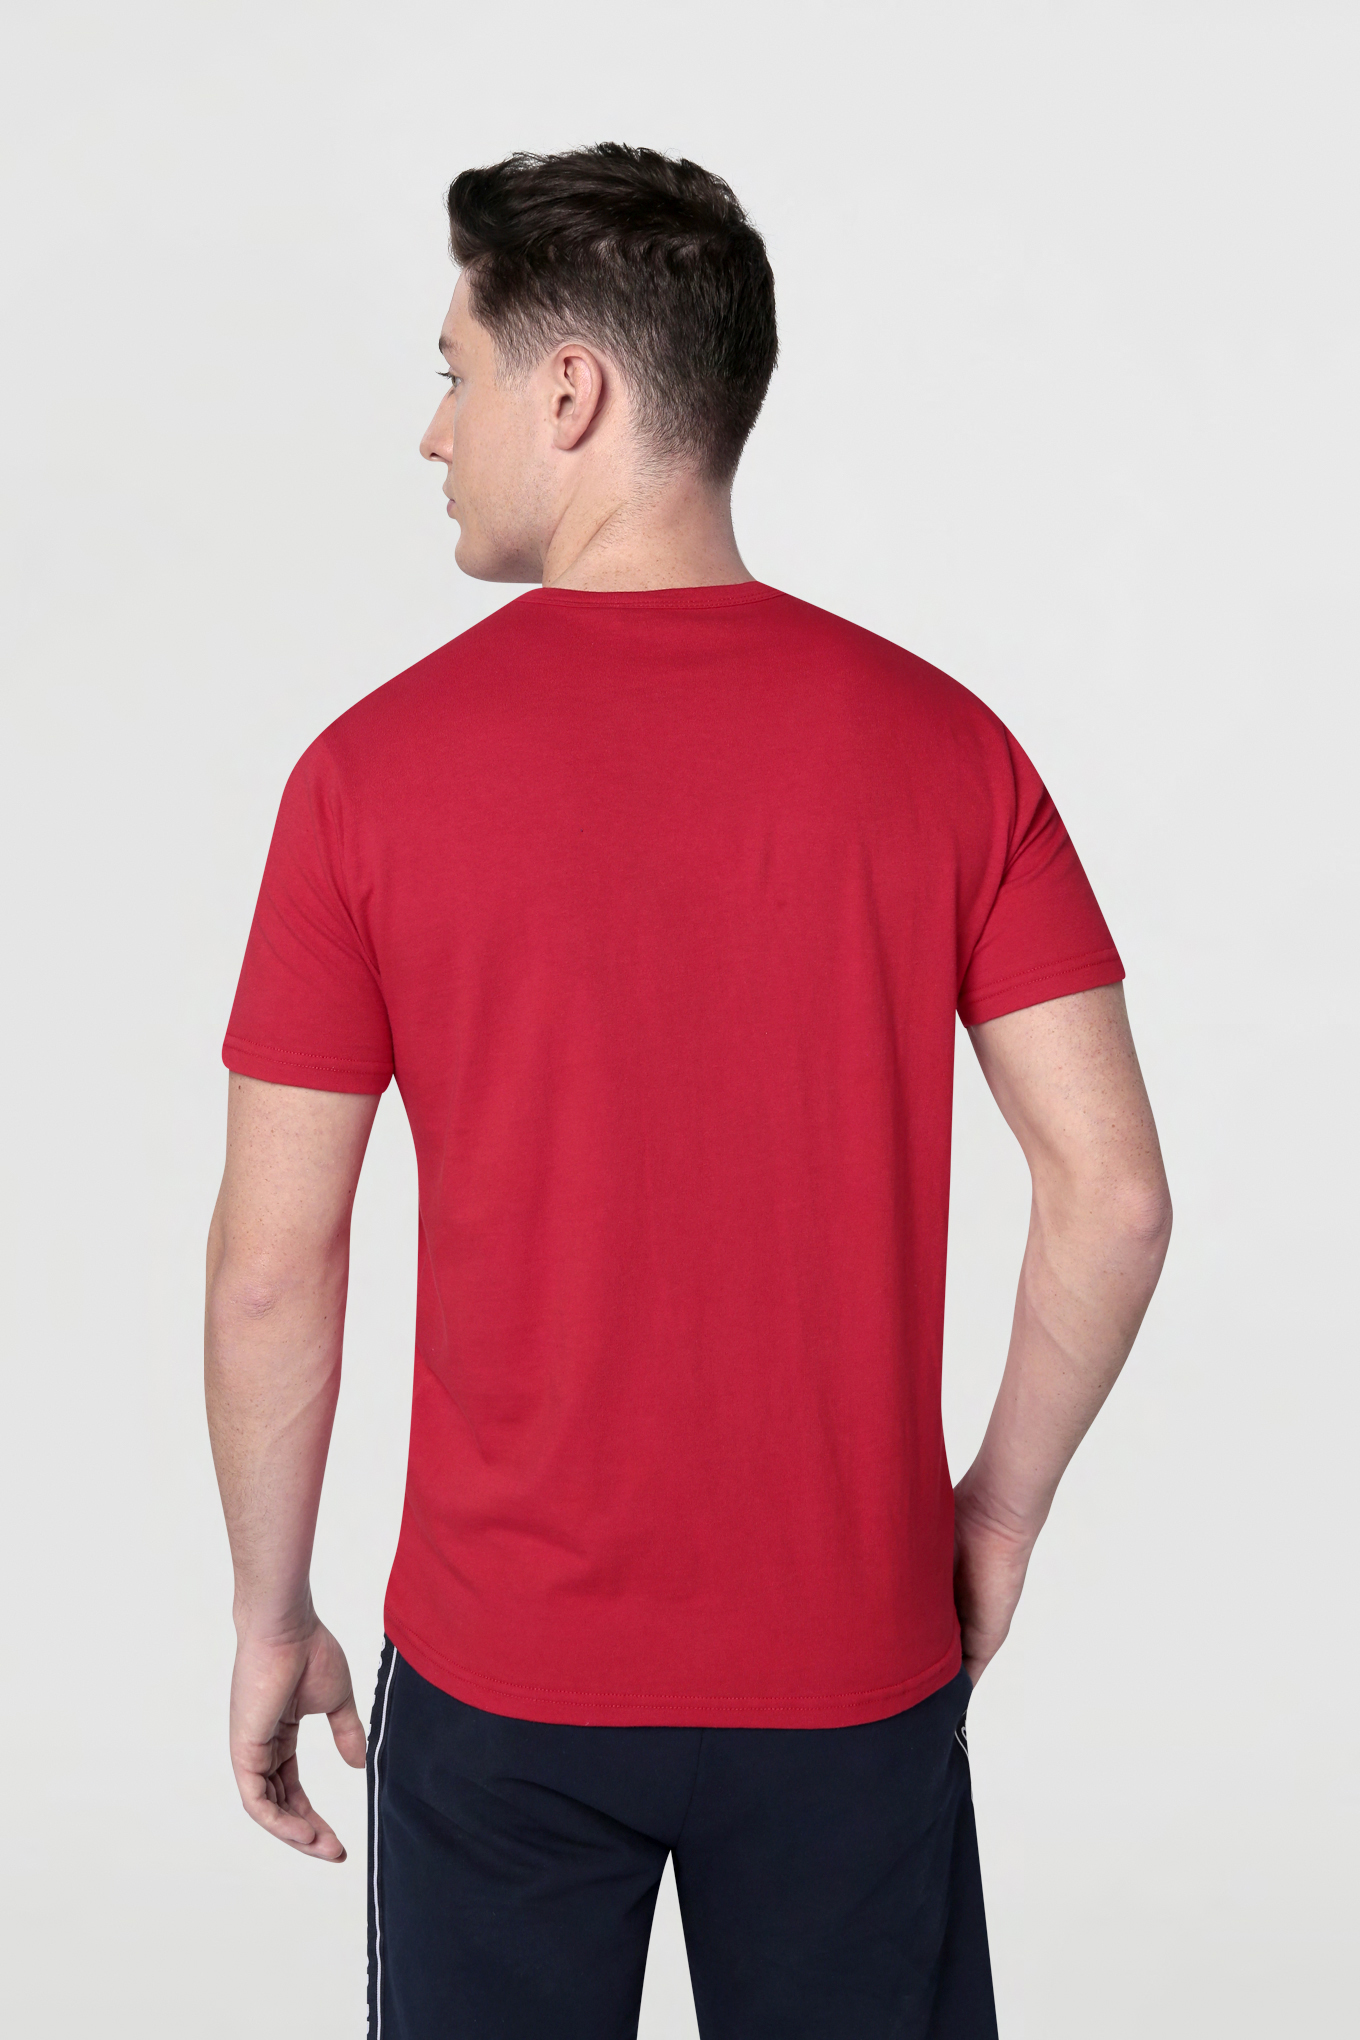 T-Shirt Vermelho Sport Homem